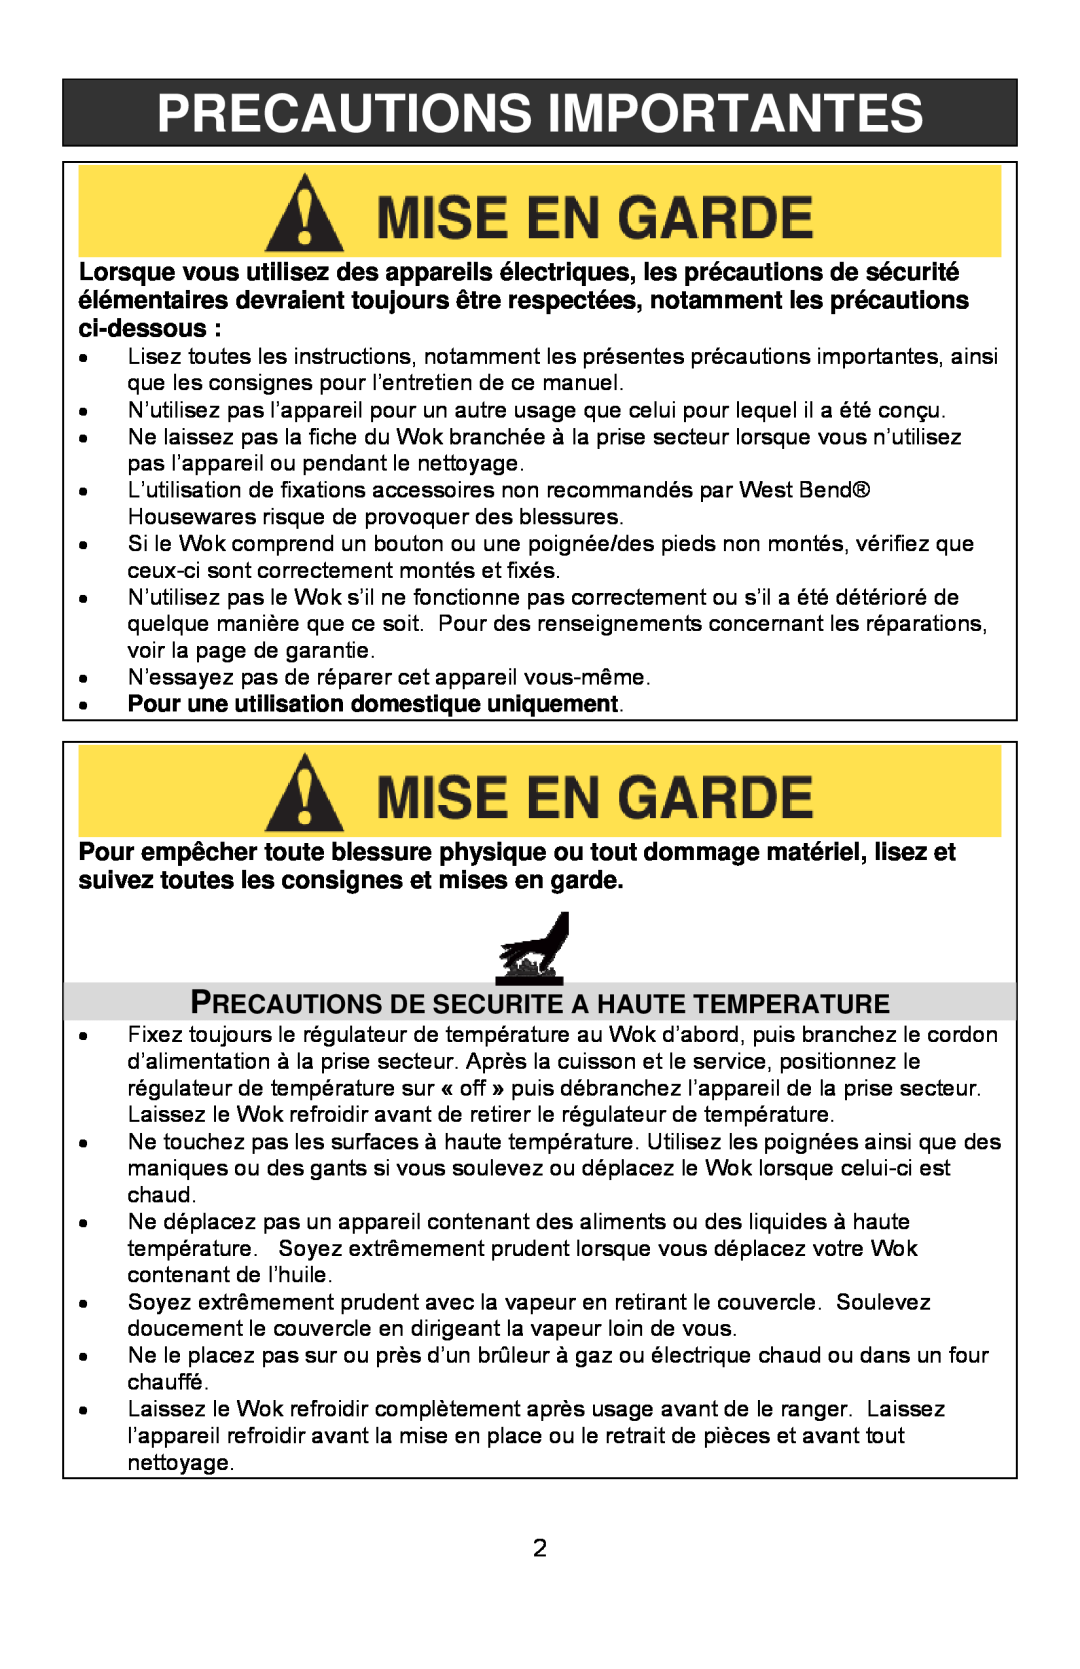 West Bend Housewares Electric Wok instruction manual Precautions Importantes, Precautions De Securite A Haute Temperature 